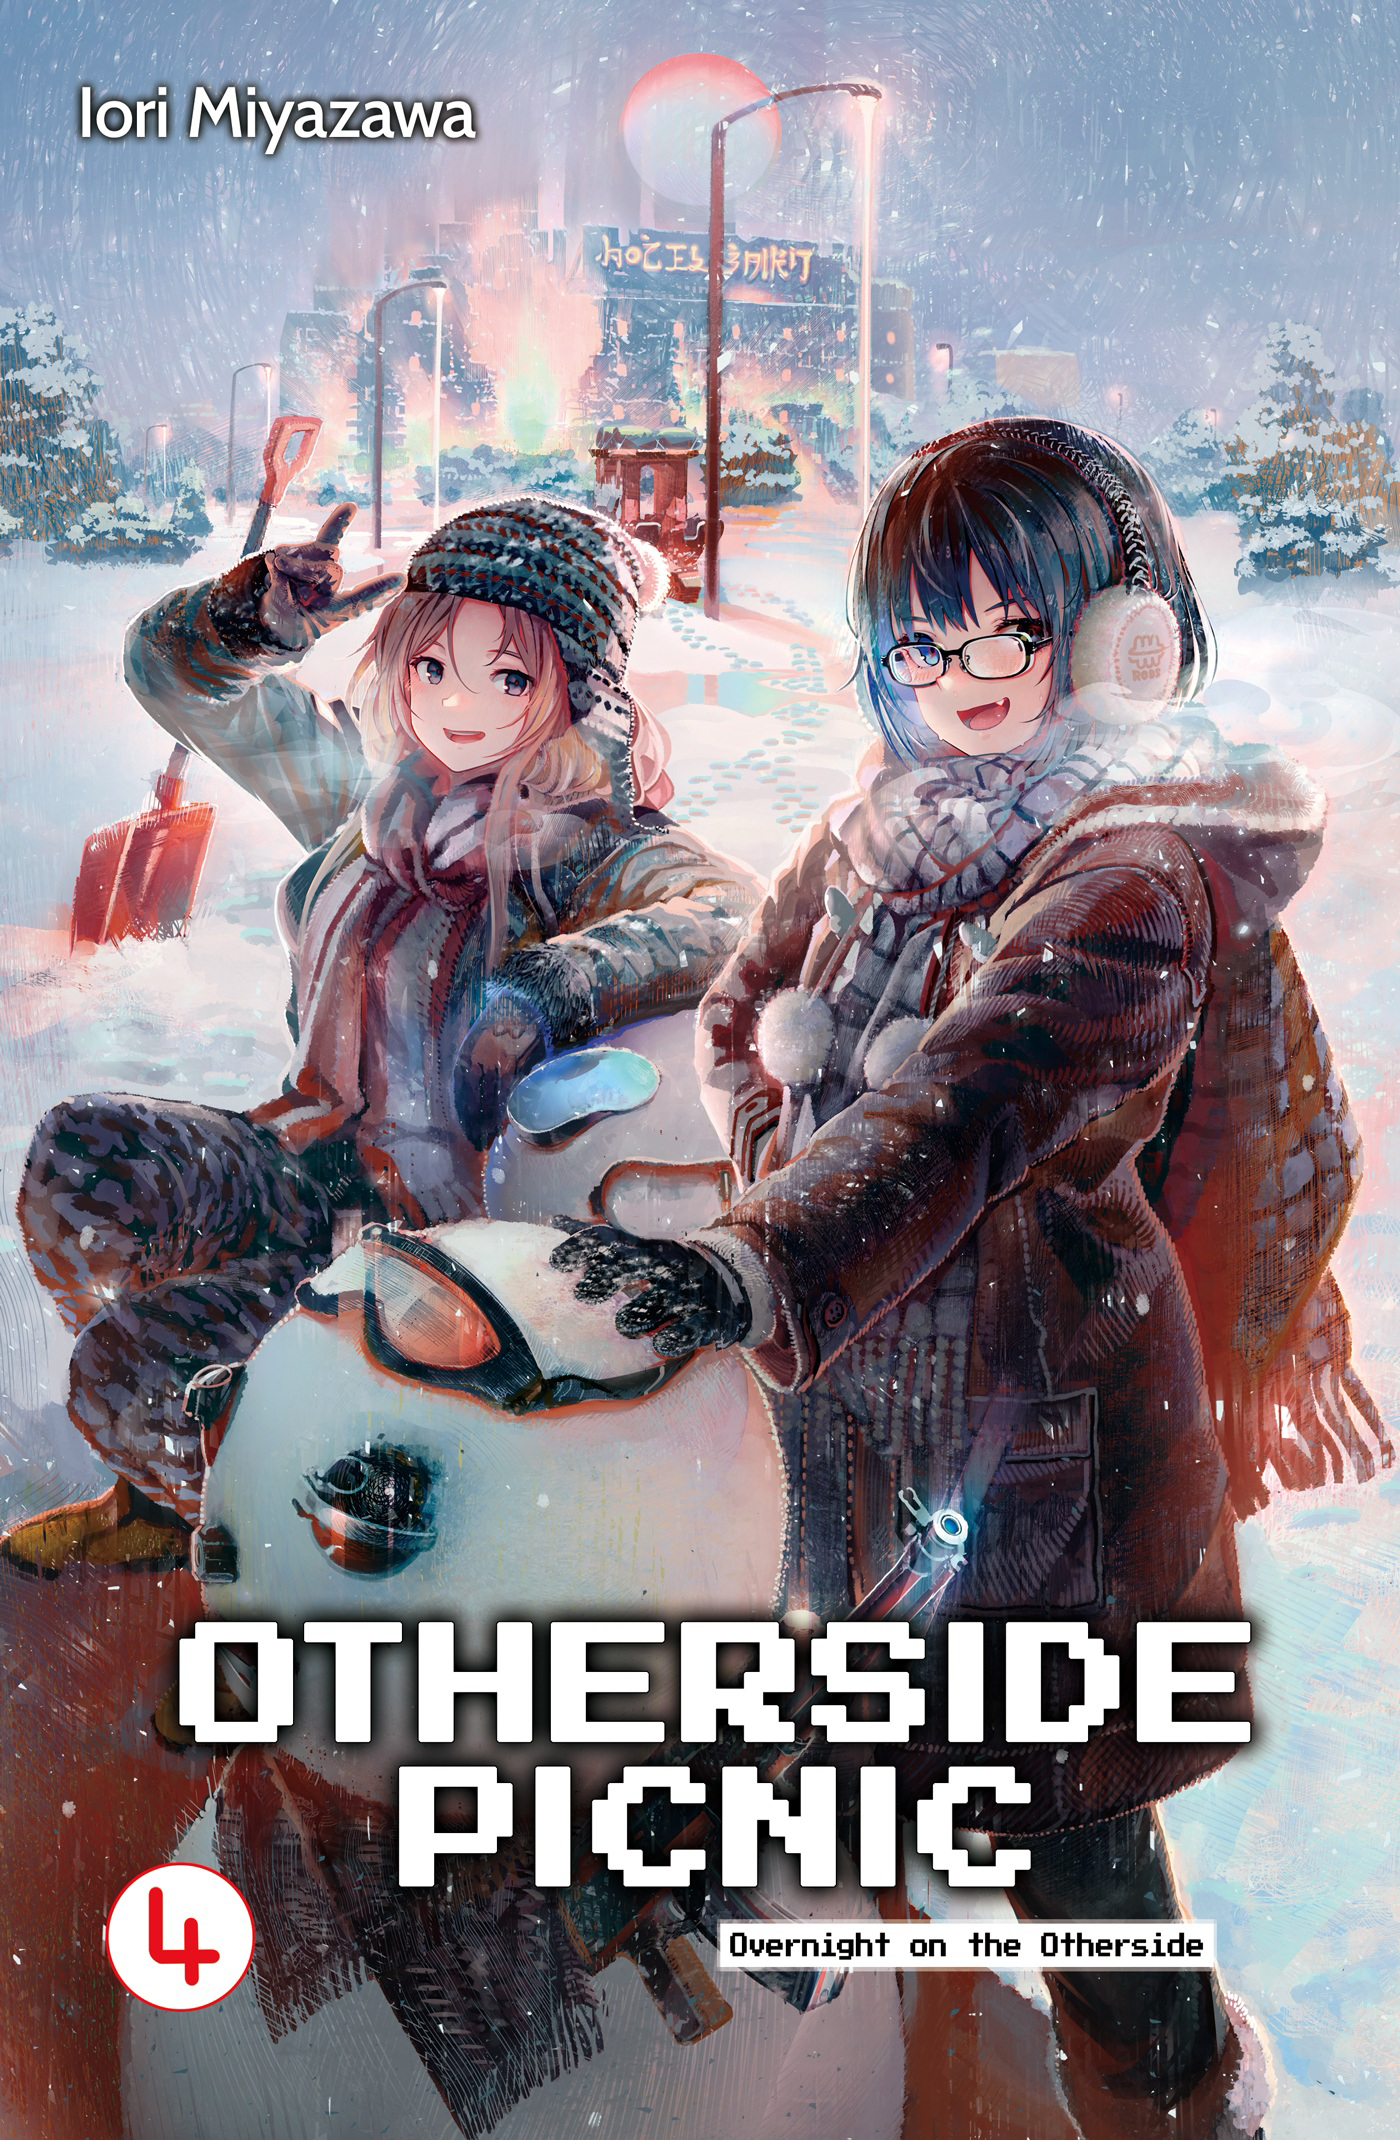 Otherside Picnic Manga Volume 7